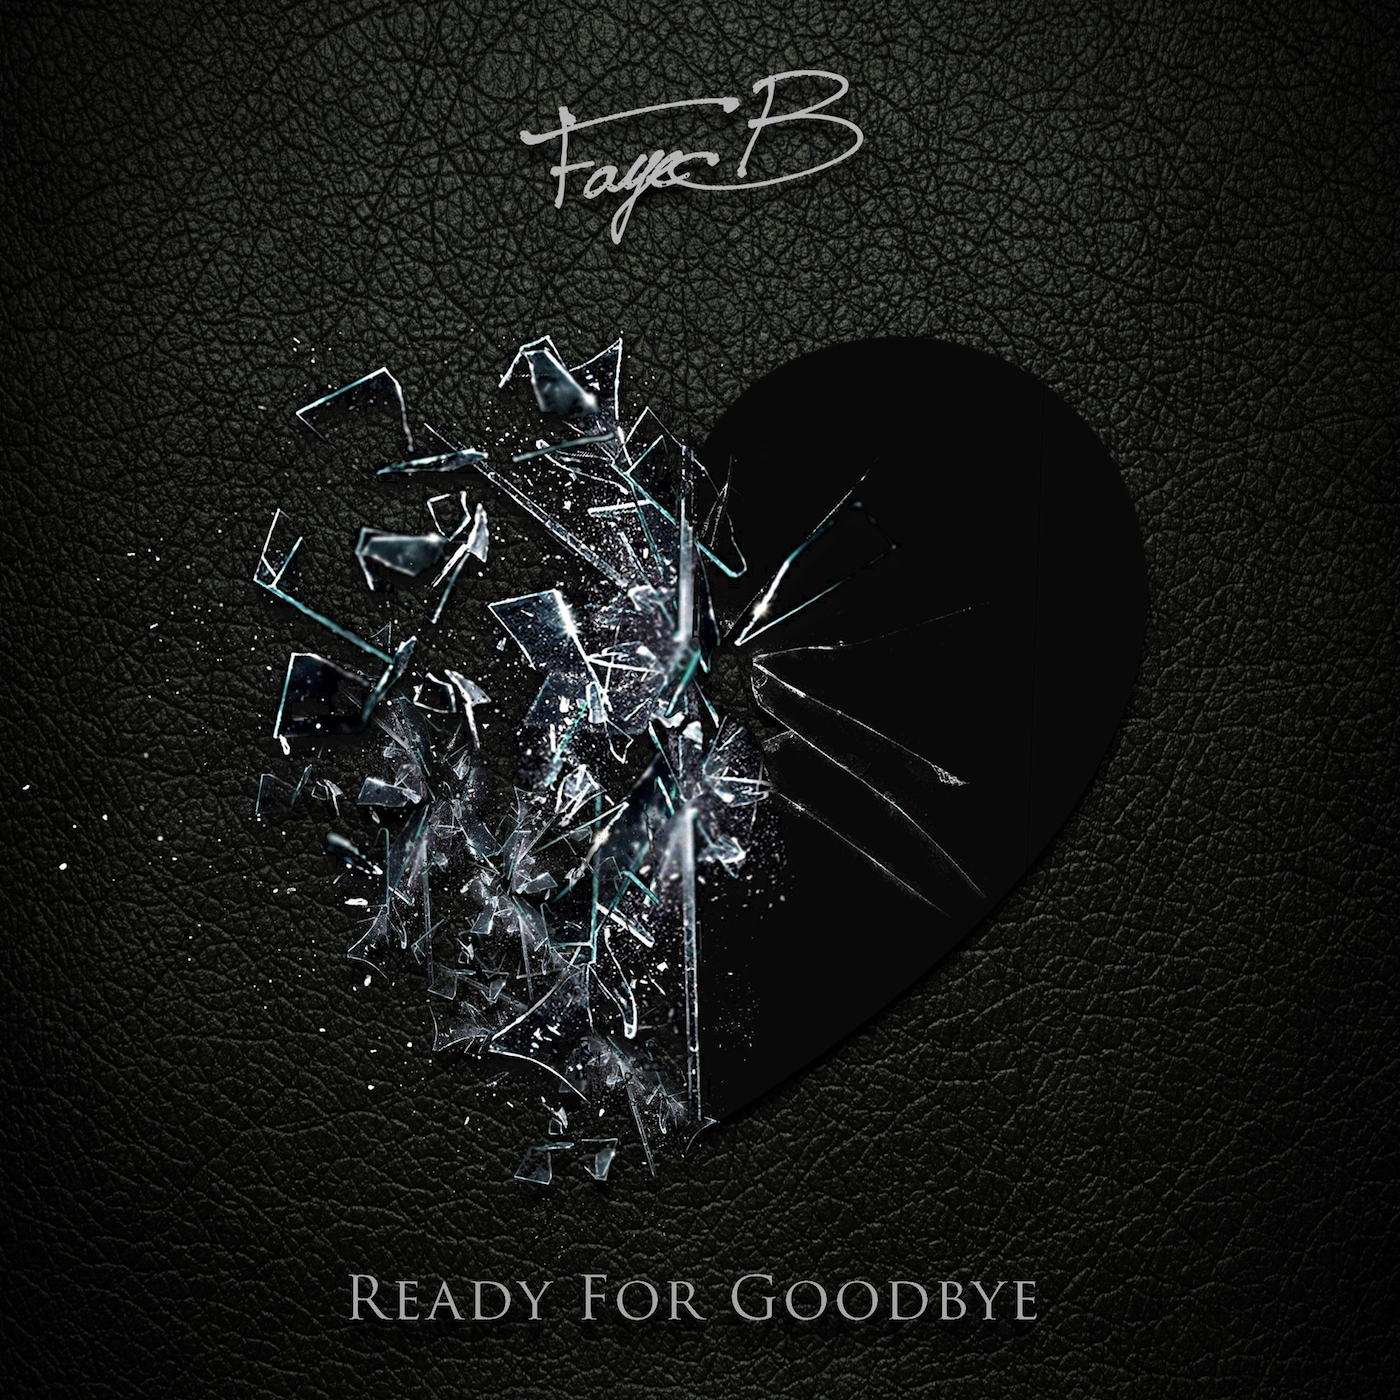 New Video: Faye B. "Ready for Goodbye" (Premiere)